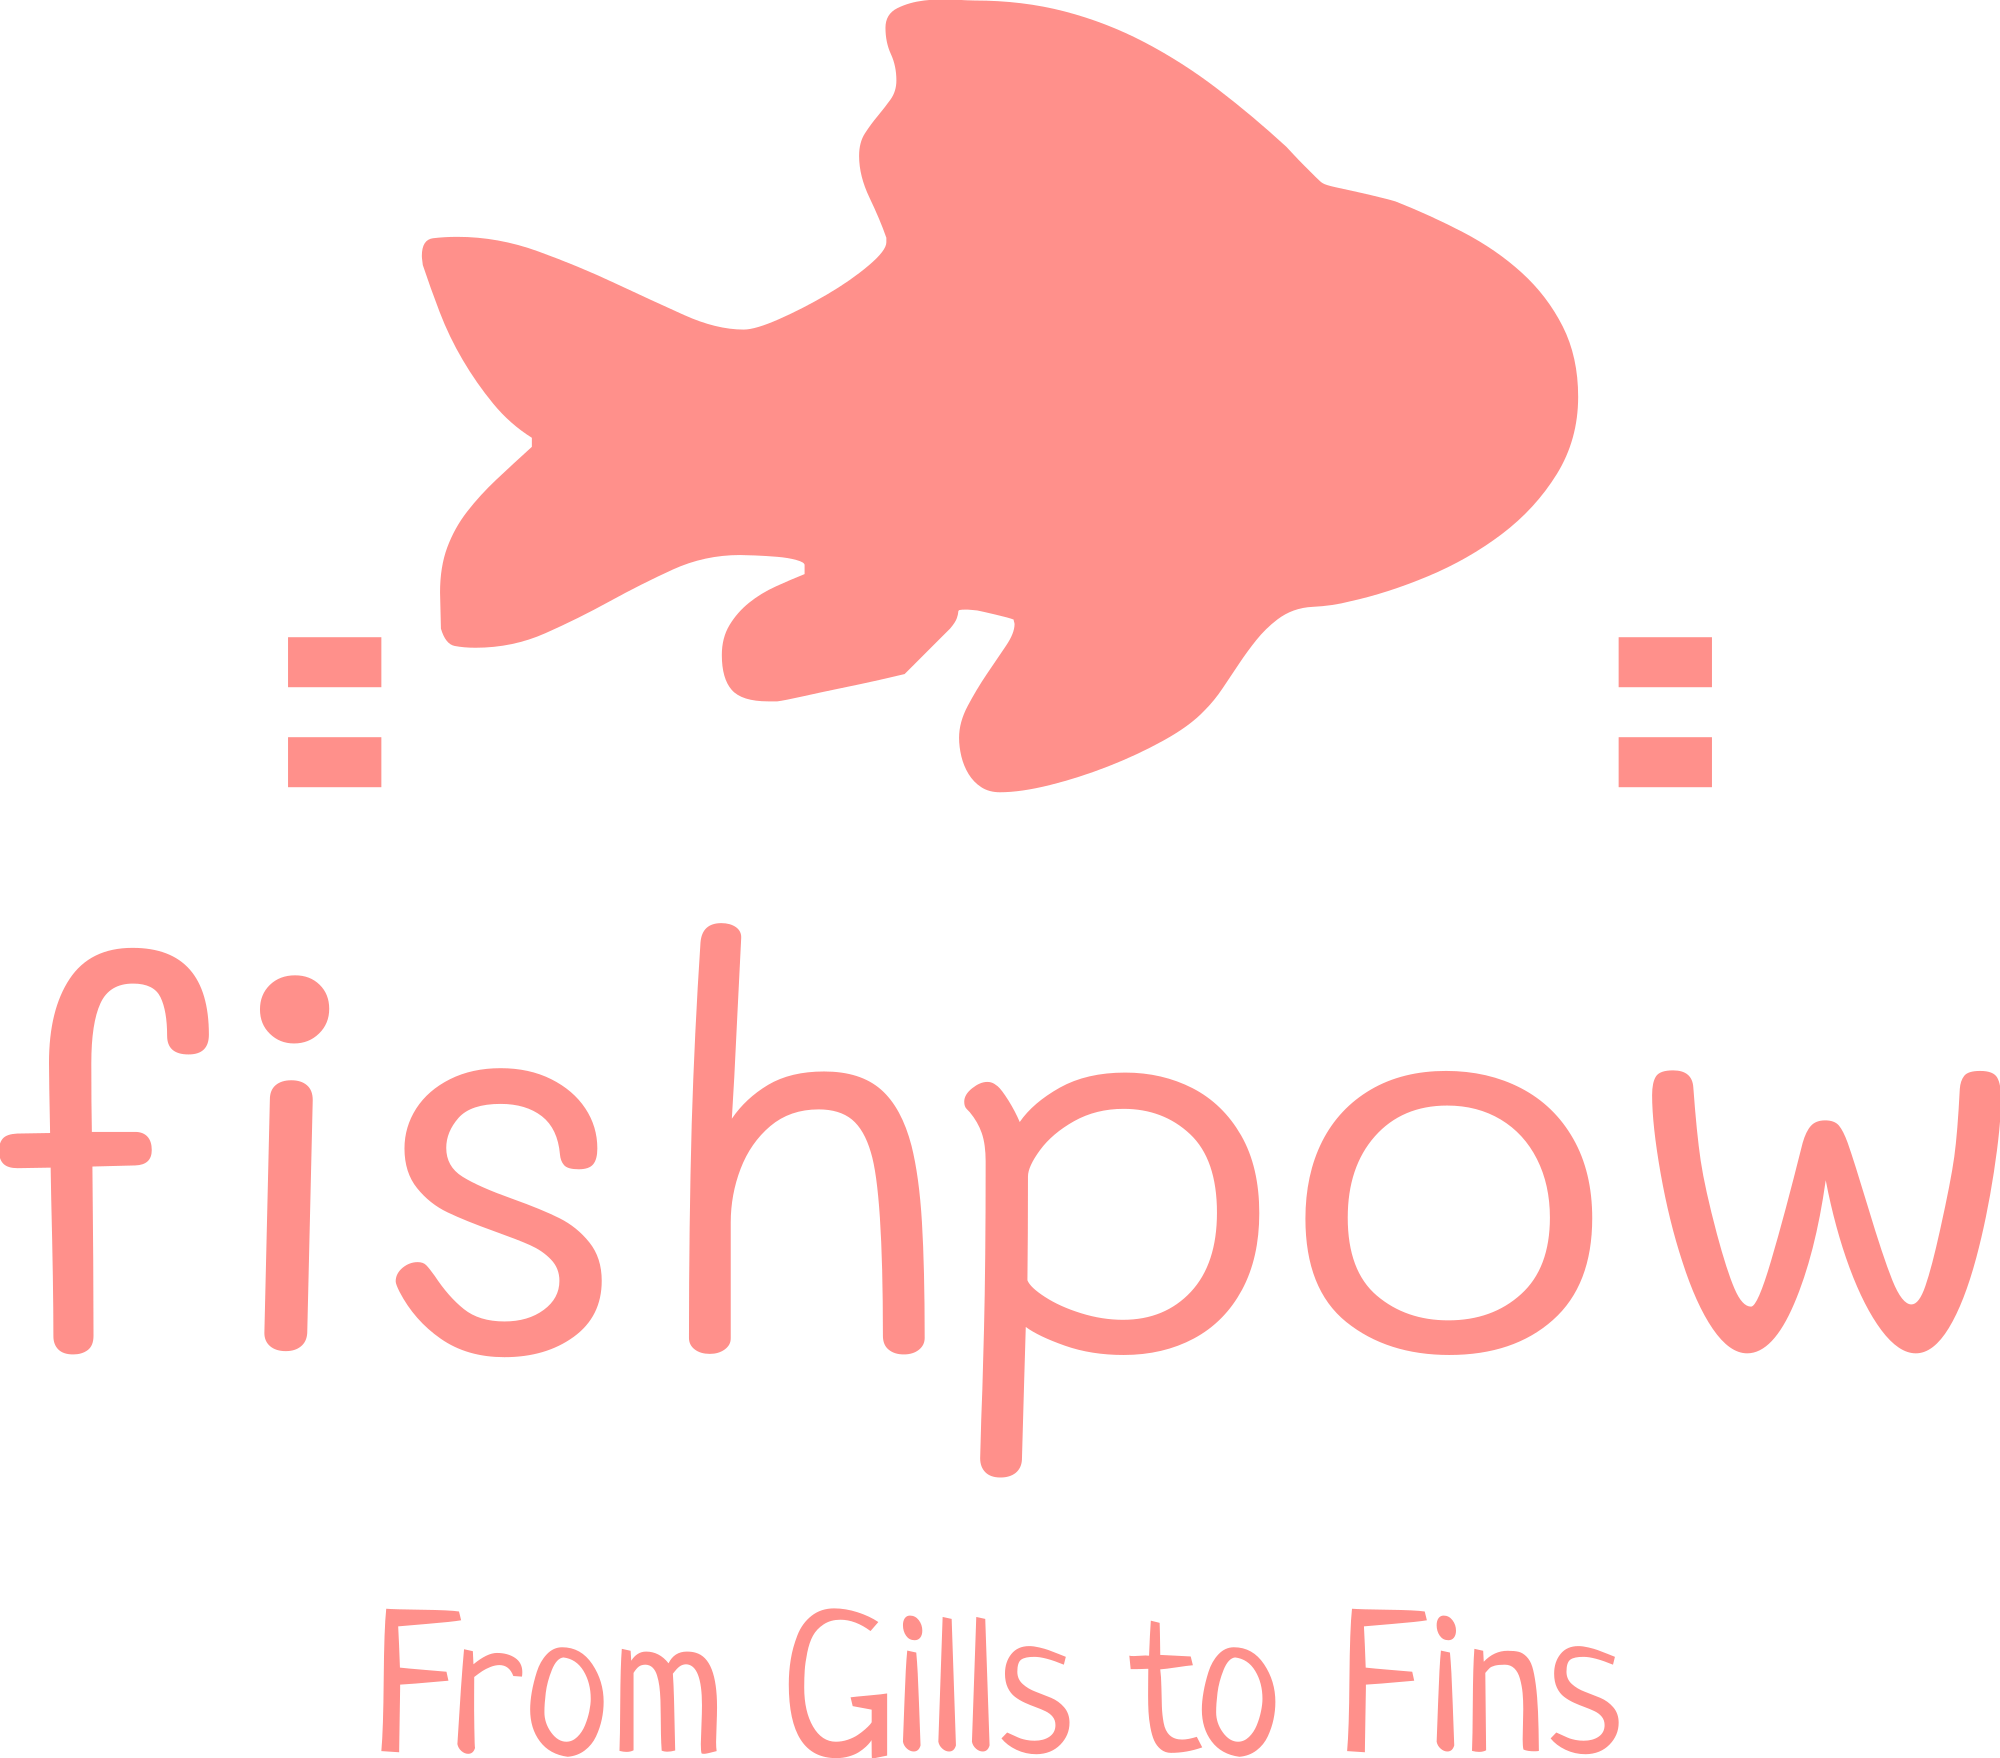 Fish Pow